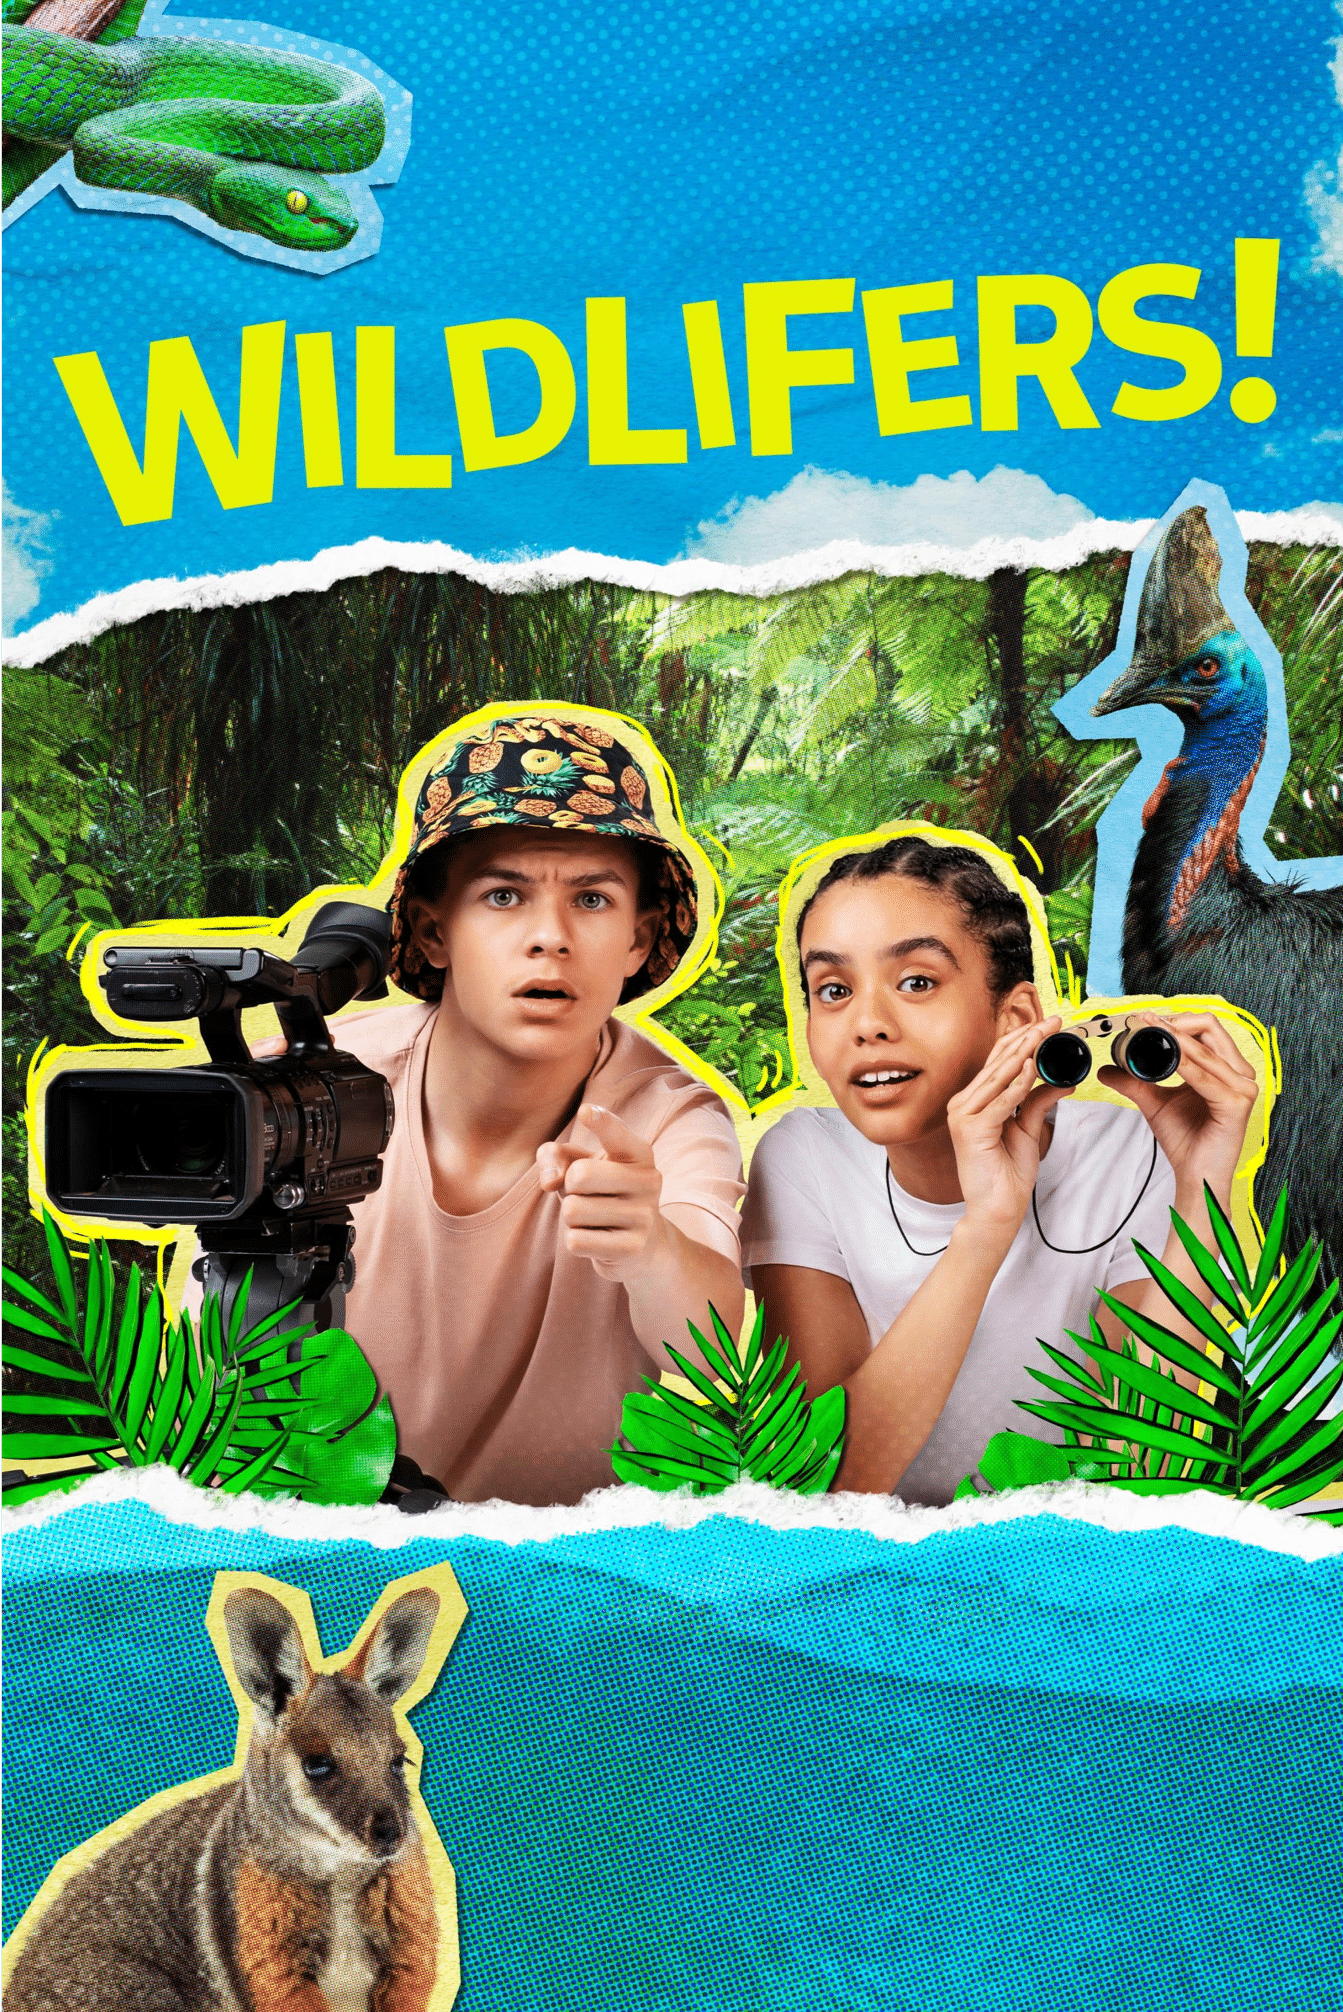 Wildlifers poster. Foley by Infidel Studios